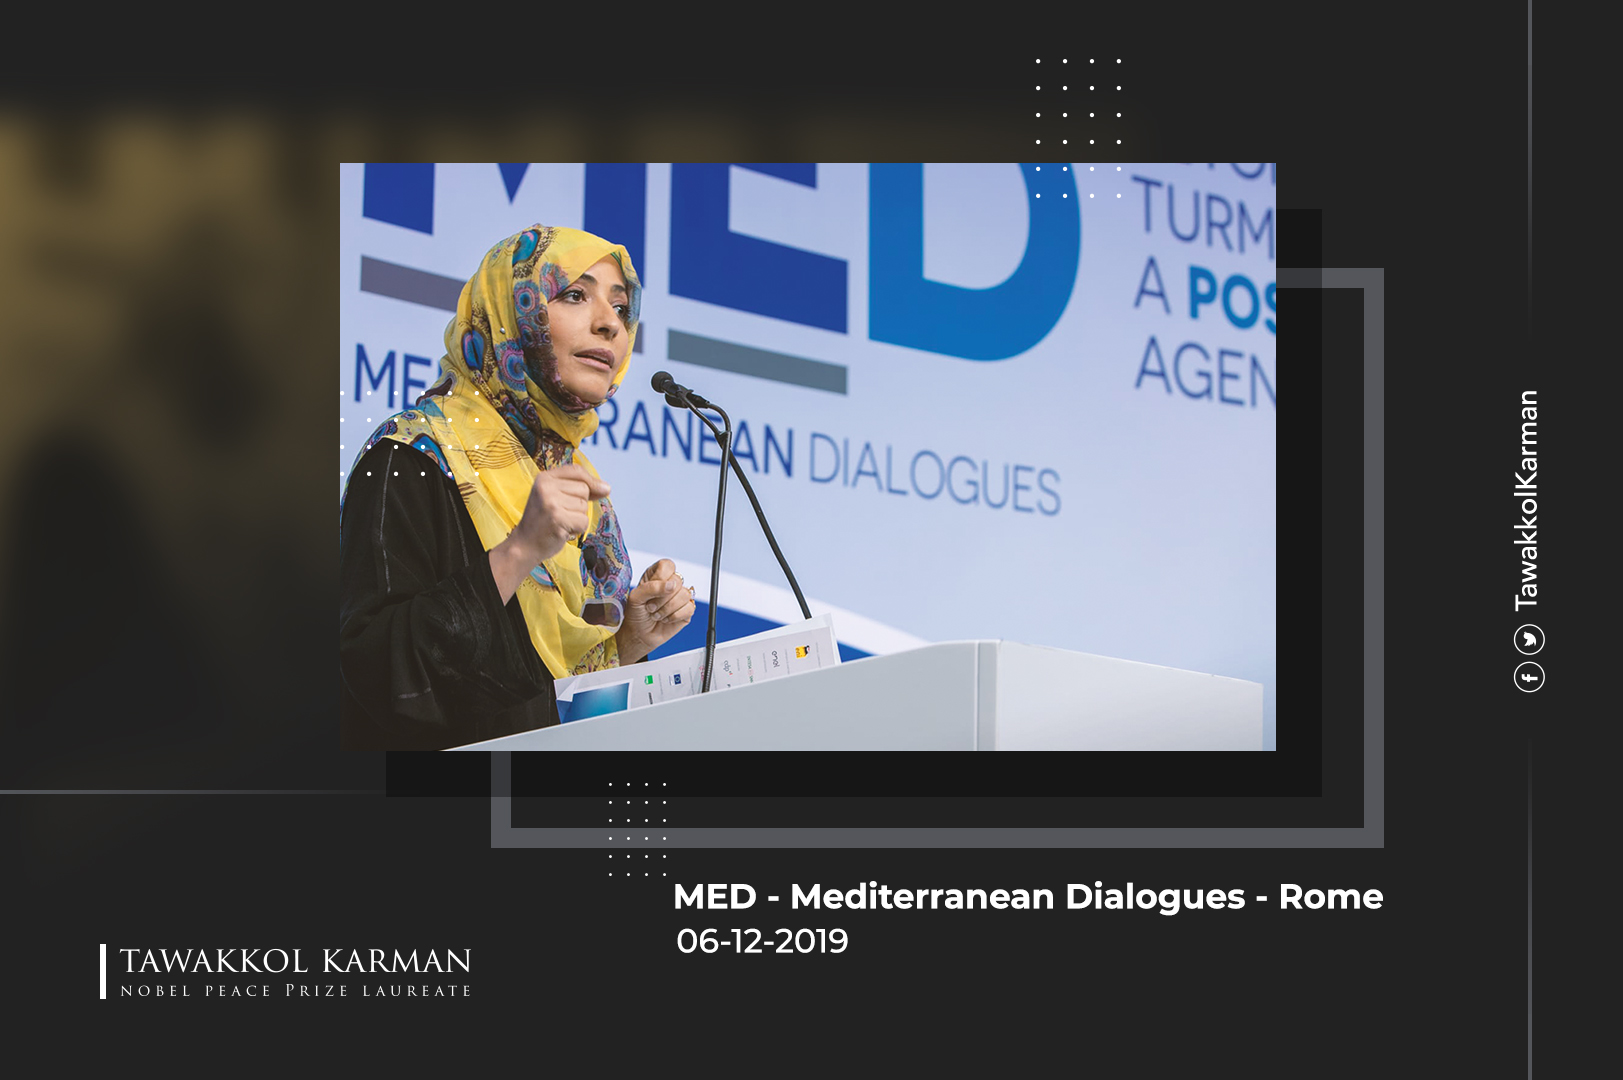 Tawakkol Karman's Speech in The Mediterranean Dialogues "MED" Rome